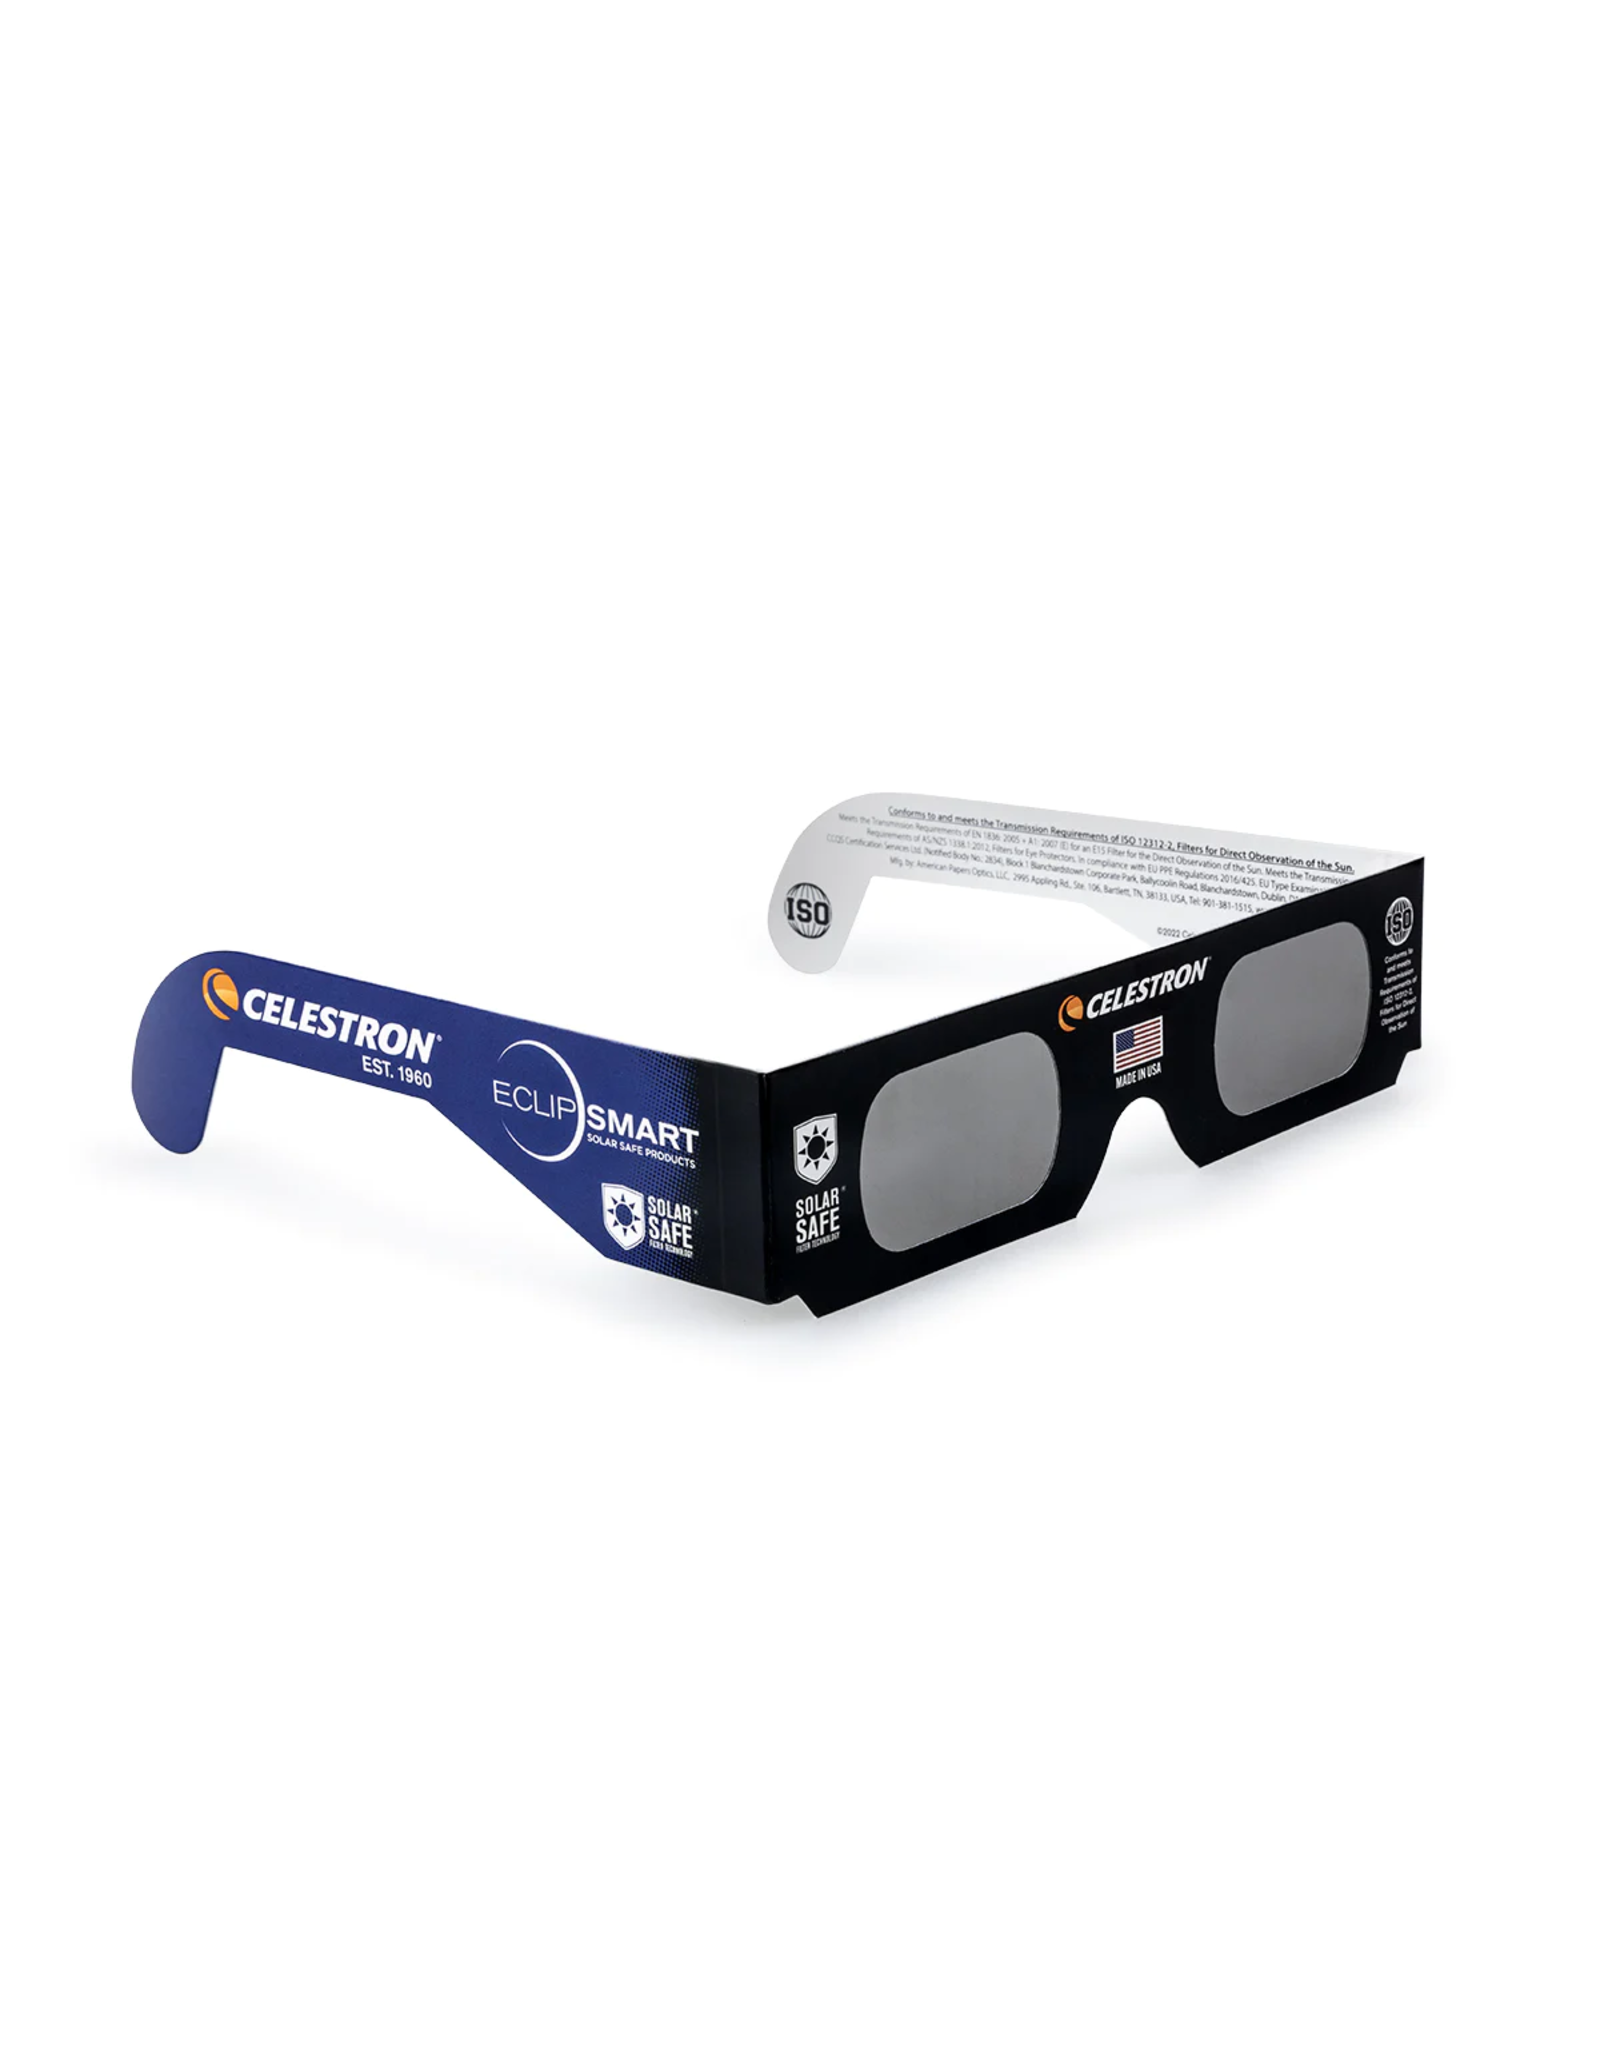 Celestron EclipSmart Solar Eclipse Glasses Camera Concepts